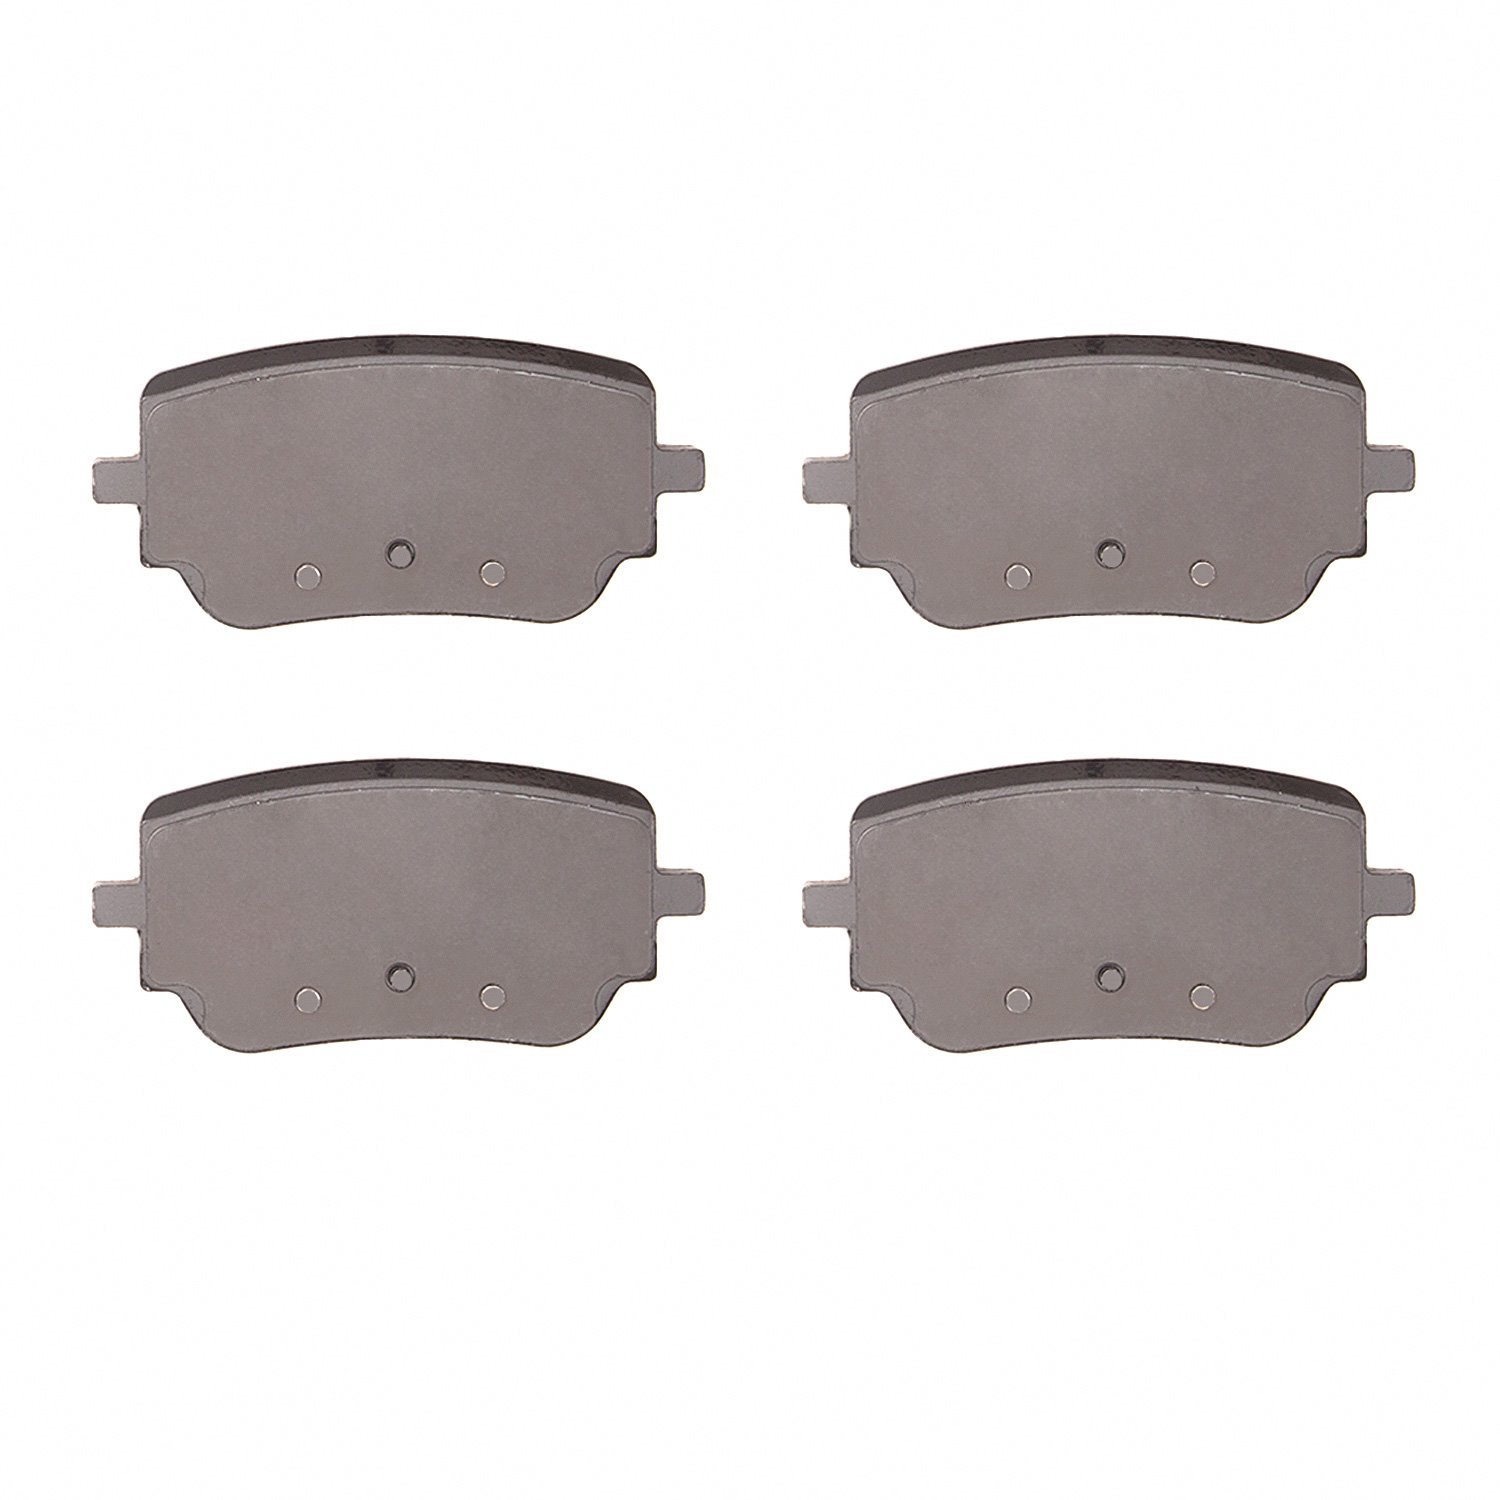 1551-2271-00 5000 Advanced Ceramic Brake Pads, Fits Select Mercedes-Benz, Position: Rear